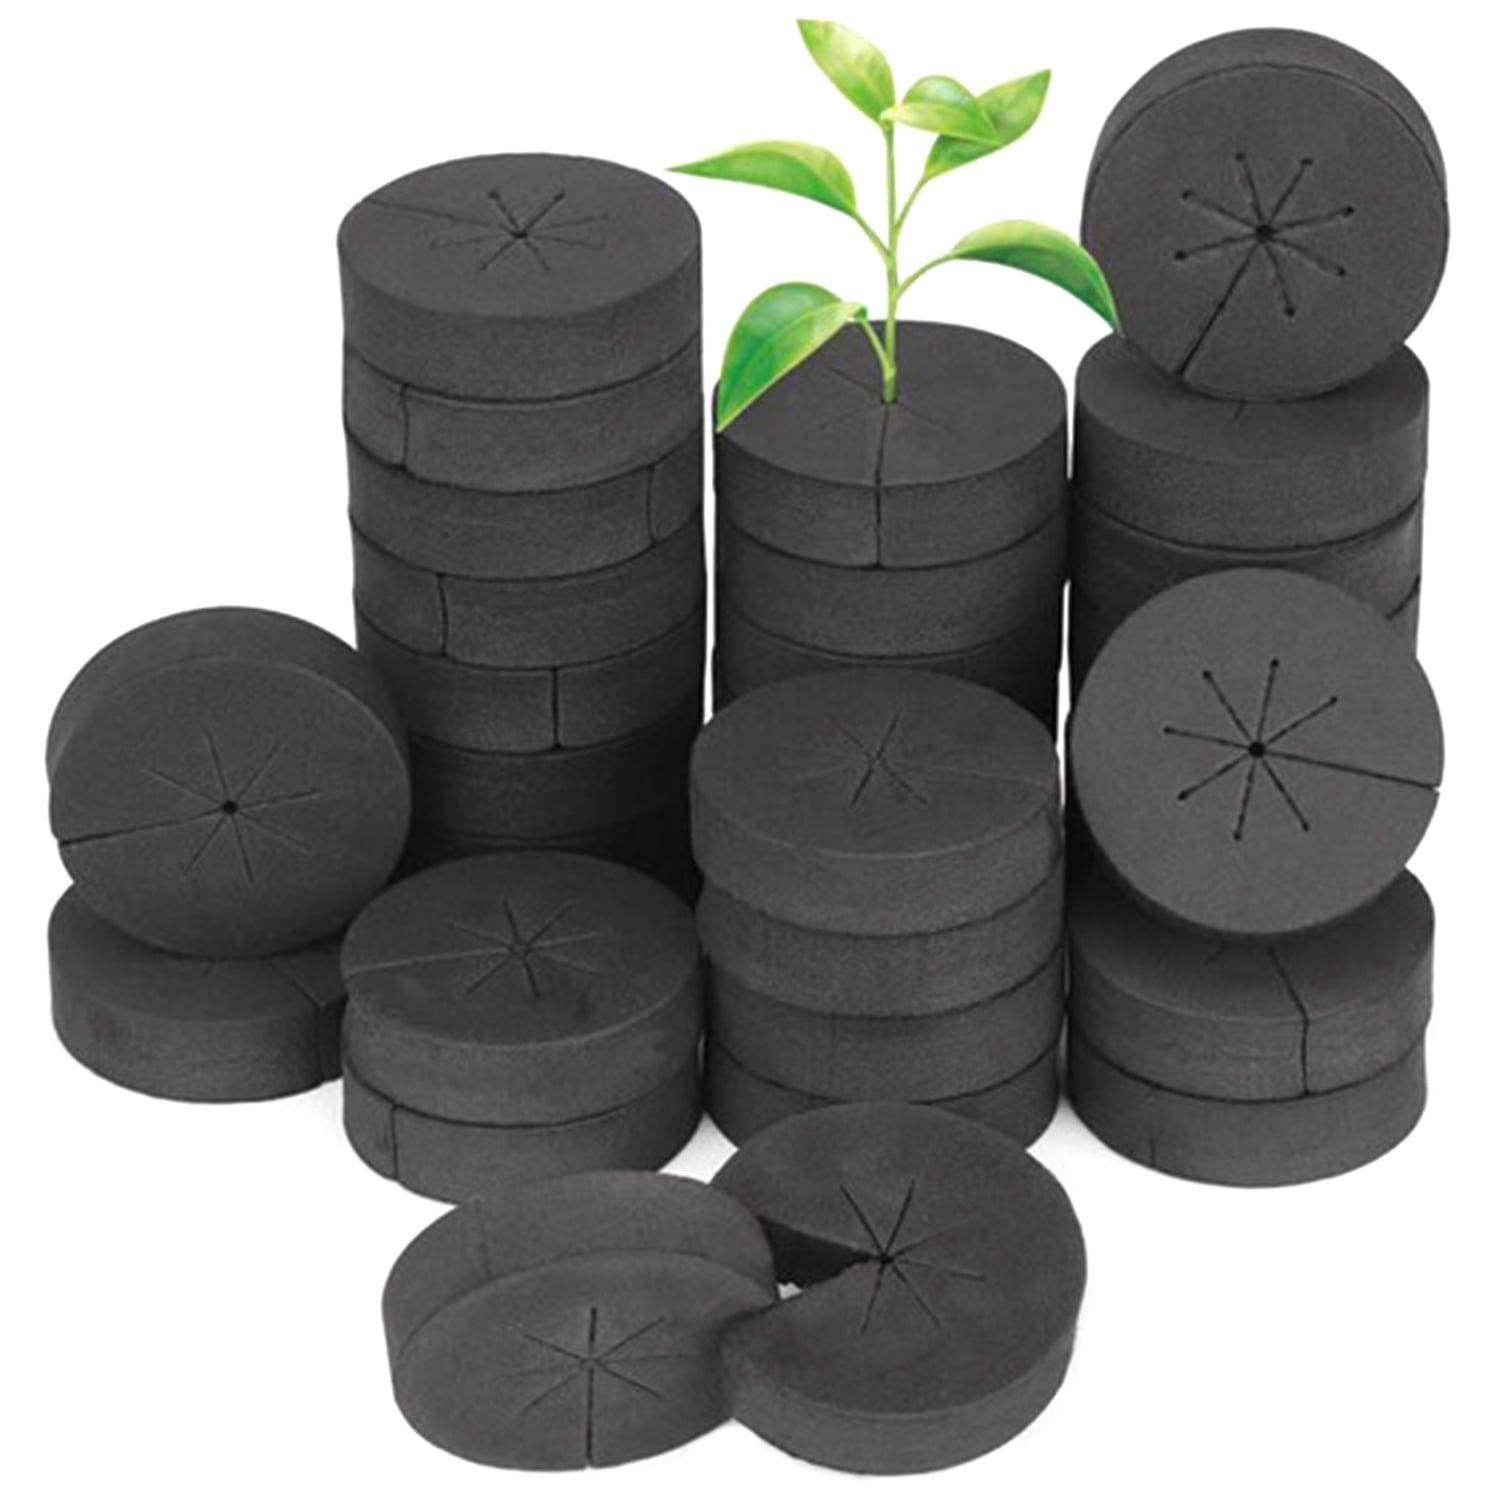 Gardening Supplies 5CM Black Neoprene collars for hydroponics system 30pcs-pack 